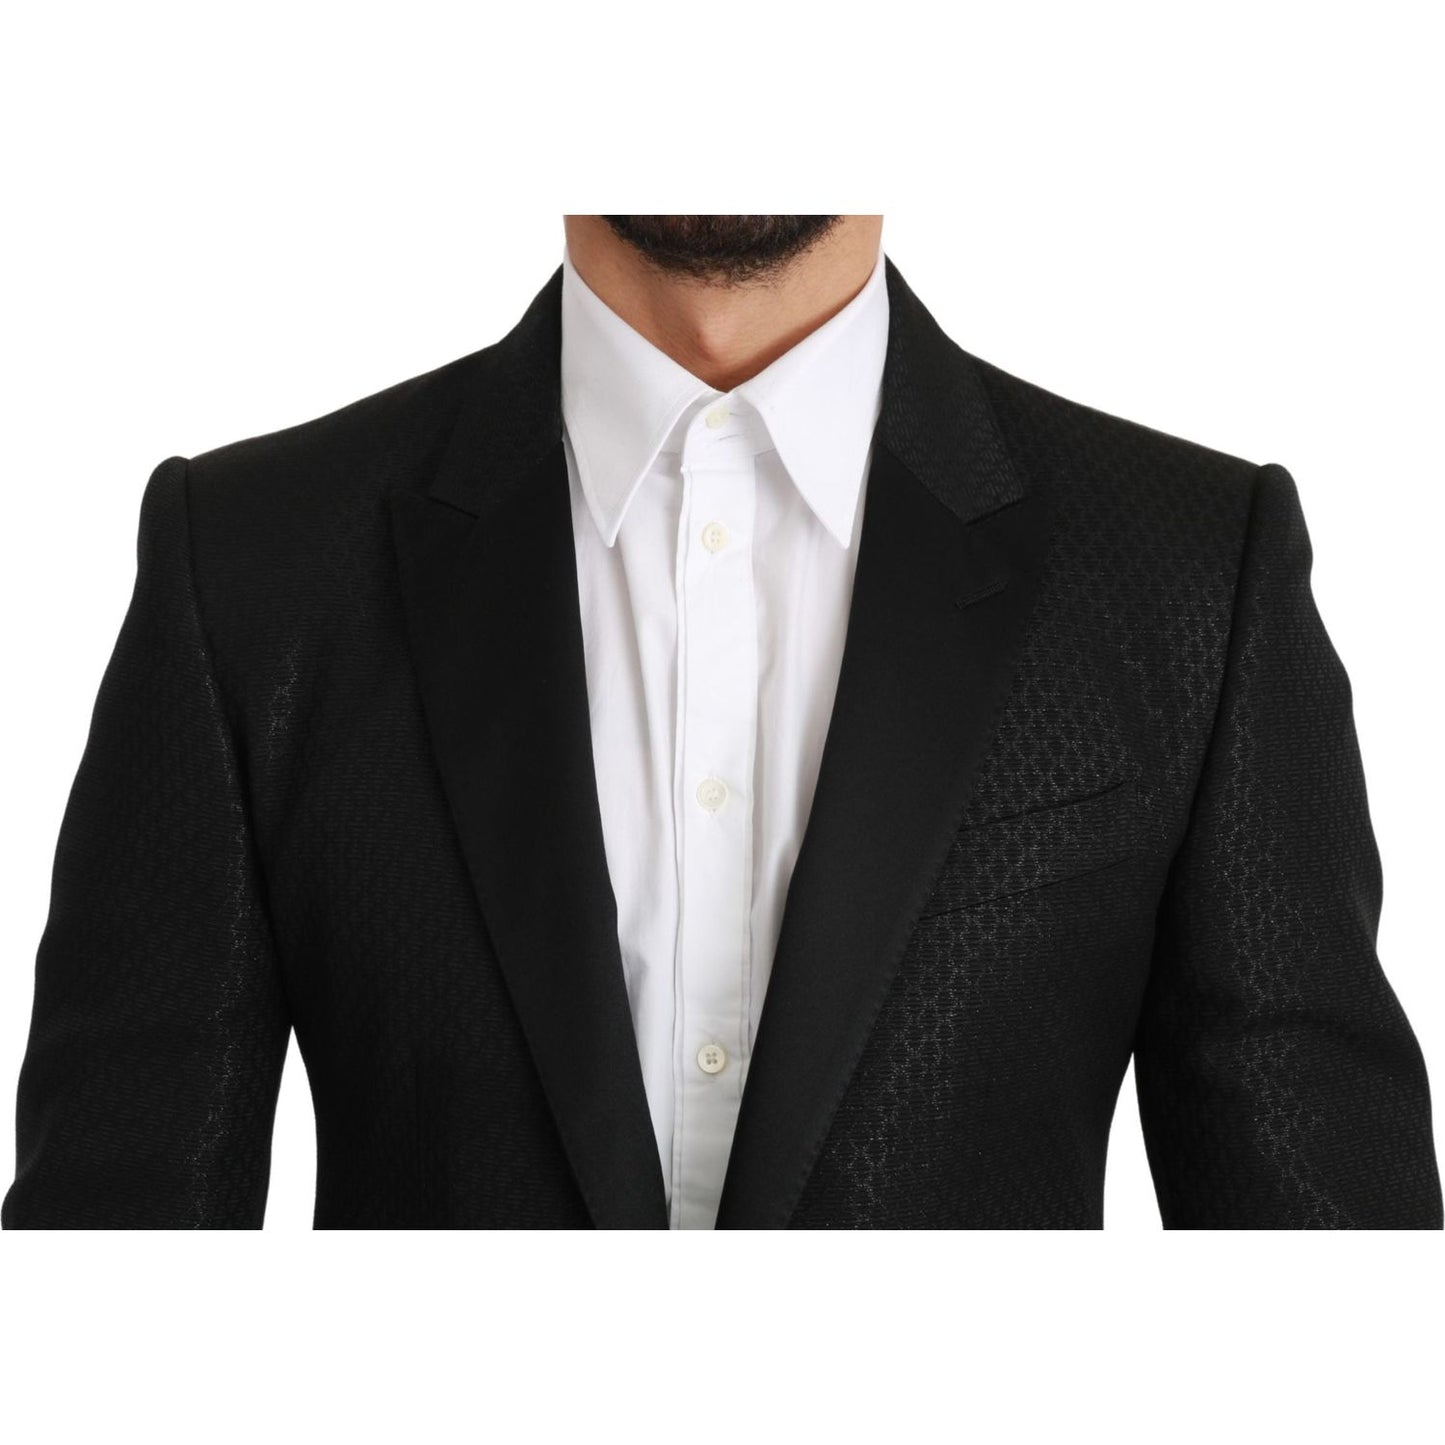 Dolce & Gabbana Slim Fit Martini Black Blazer Jacket Suit black-slim-fit-jacket-martini-blazer IMG_1016-scaled-33a89cb0-ced.jpg